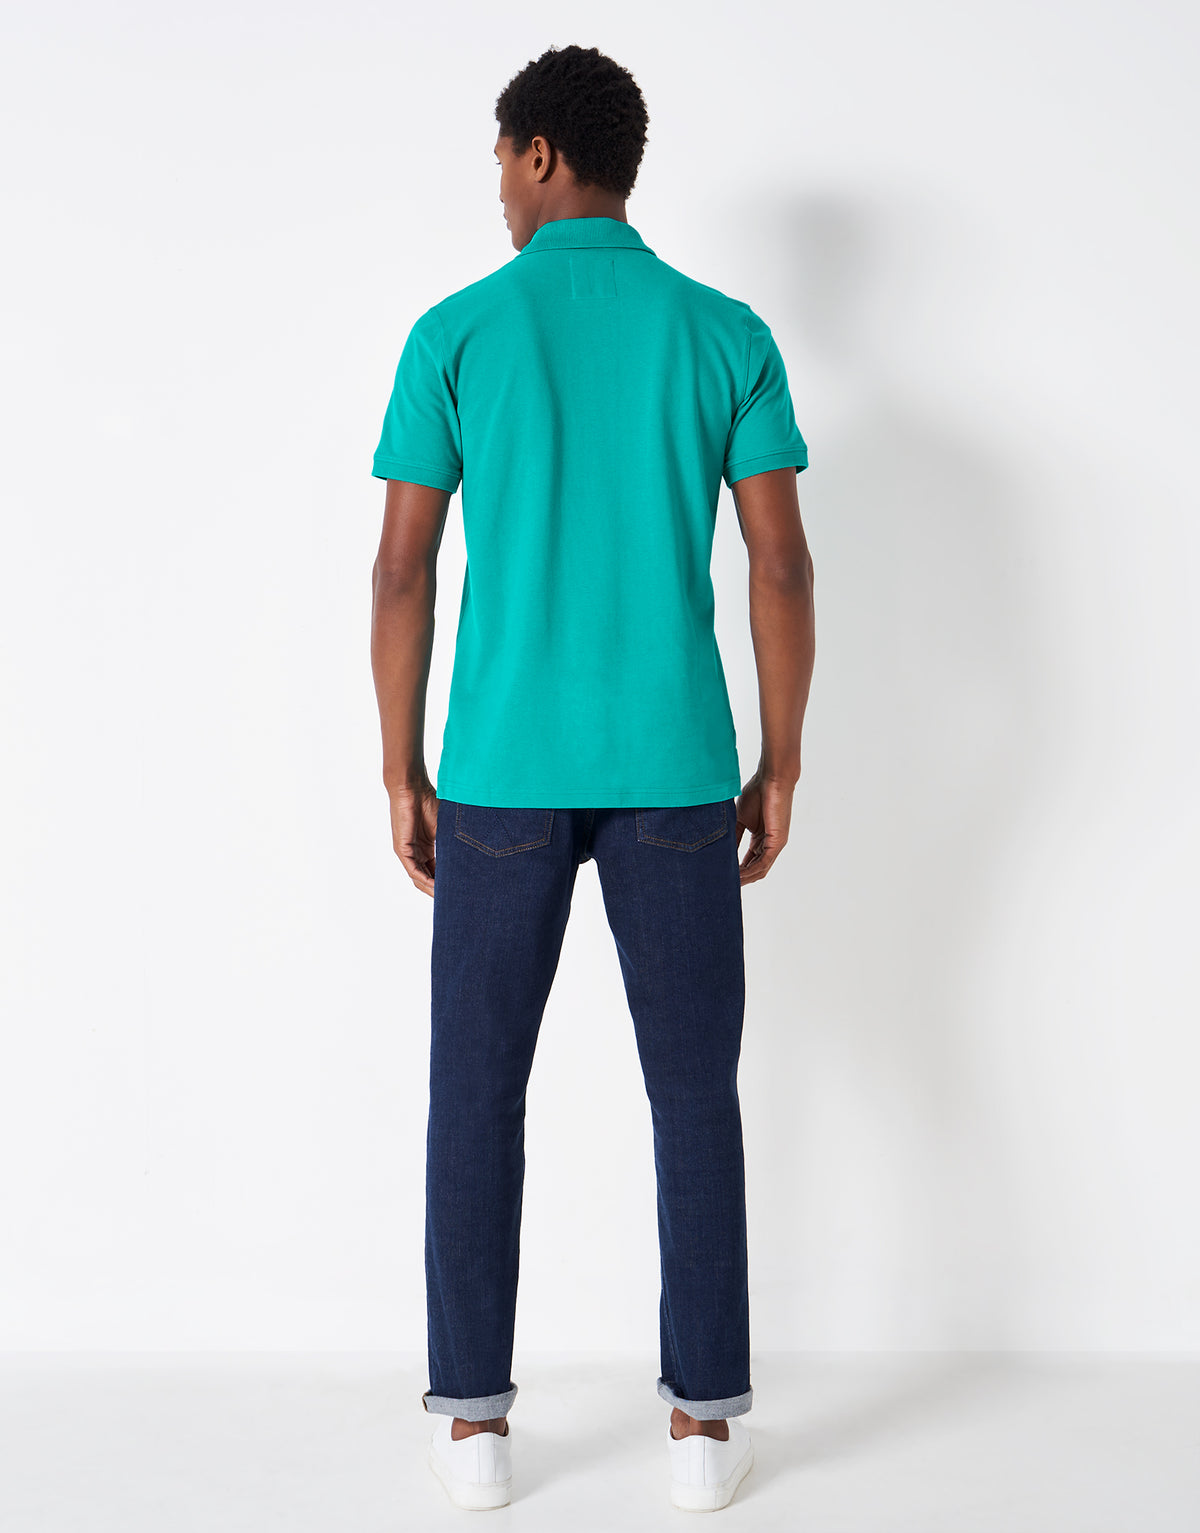 Crew Clothing Mens Pique Polo Shirt 'Classic Pique Polo' - Short Sleeved, 02, Mke002, Veridian Green